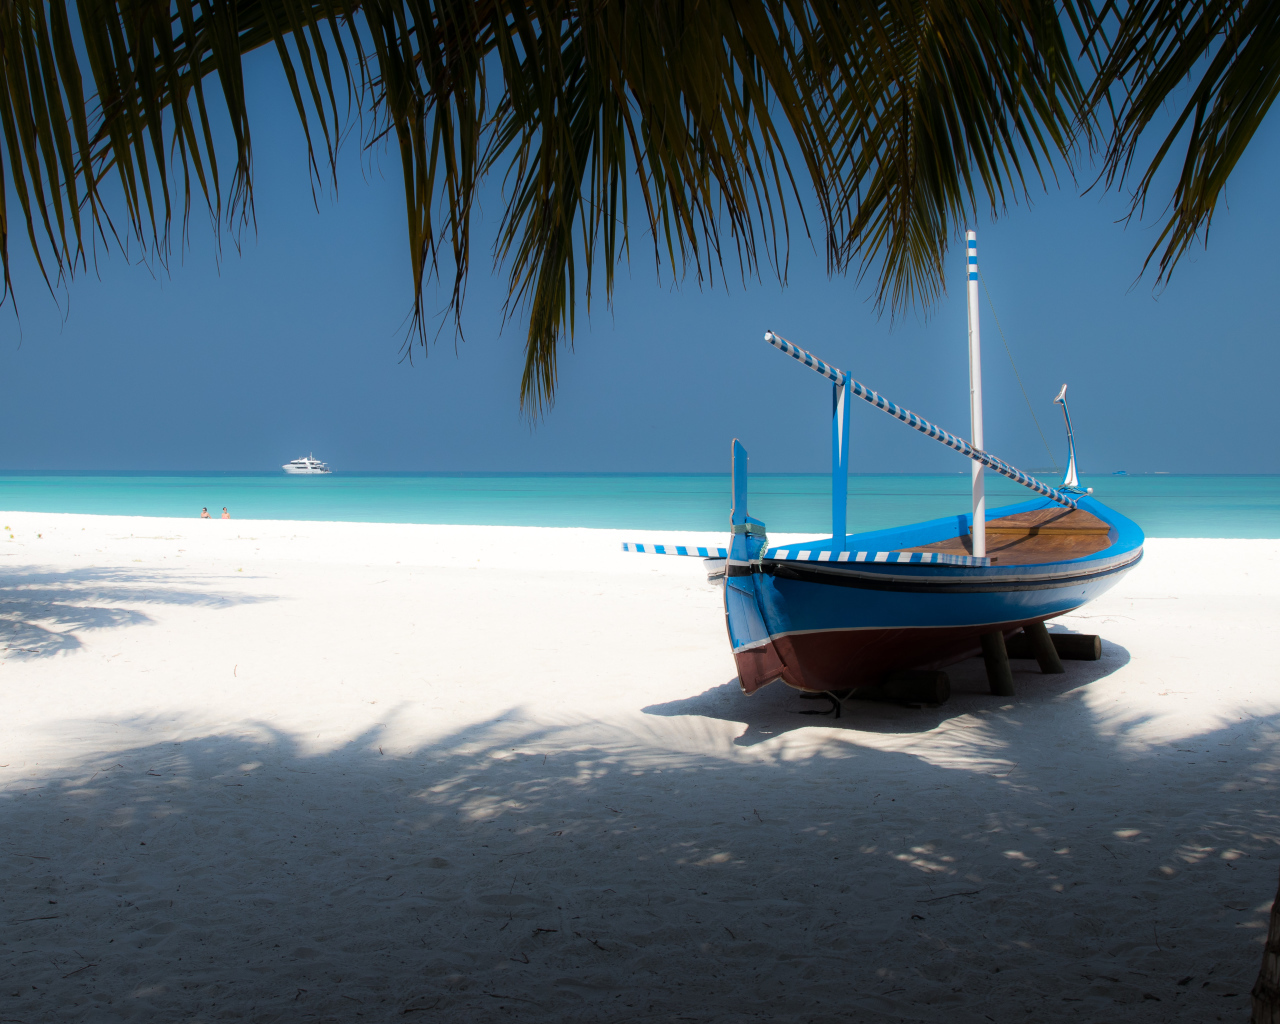 Лодка на белом песке у океана в тропиках